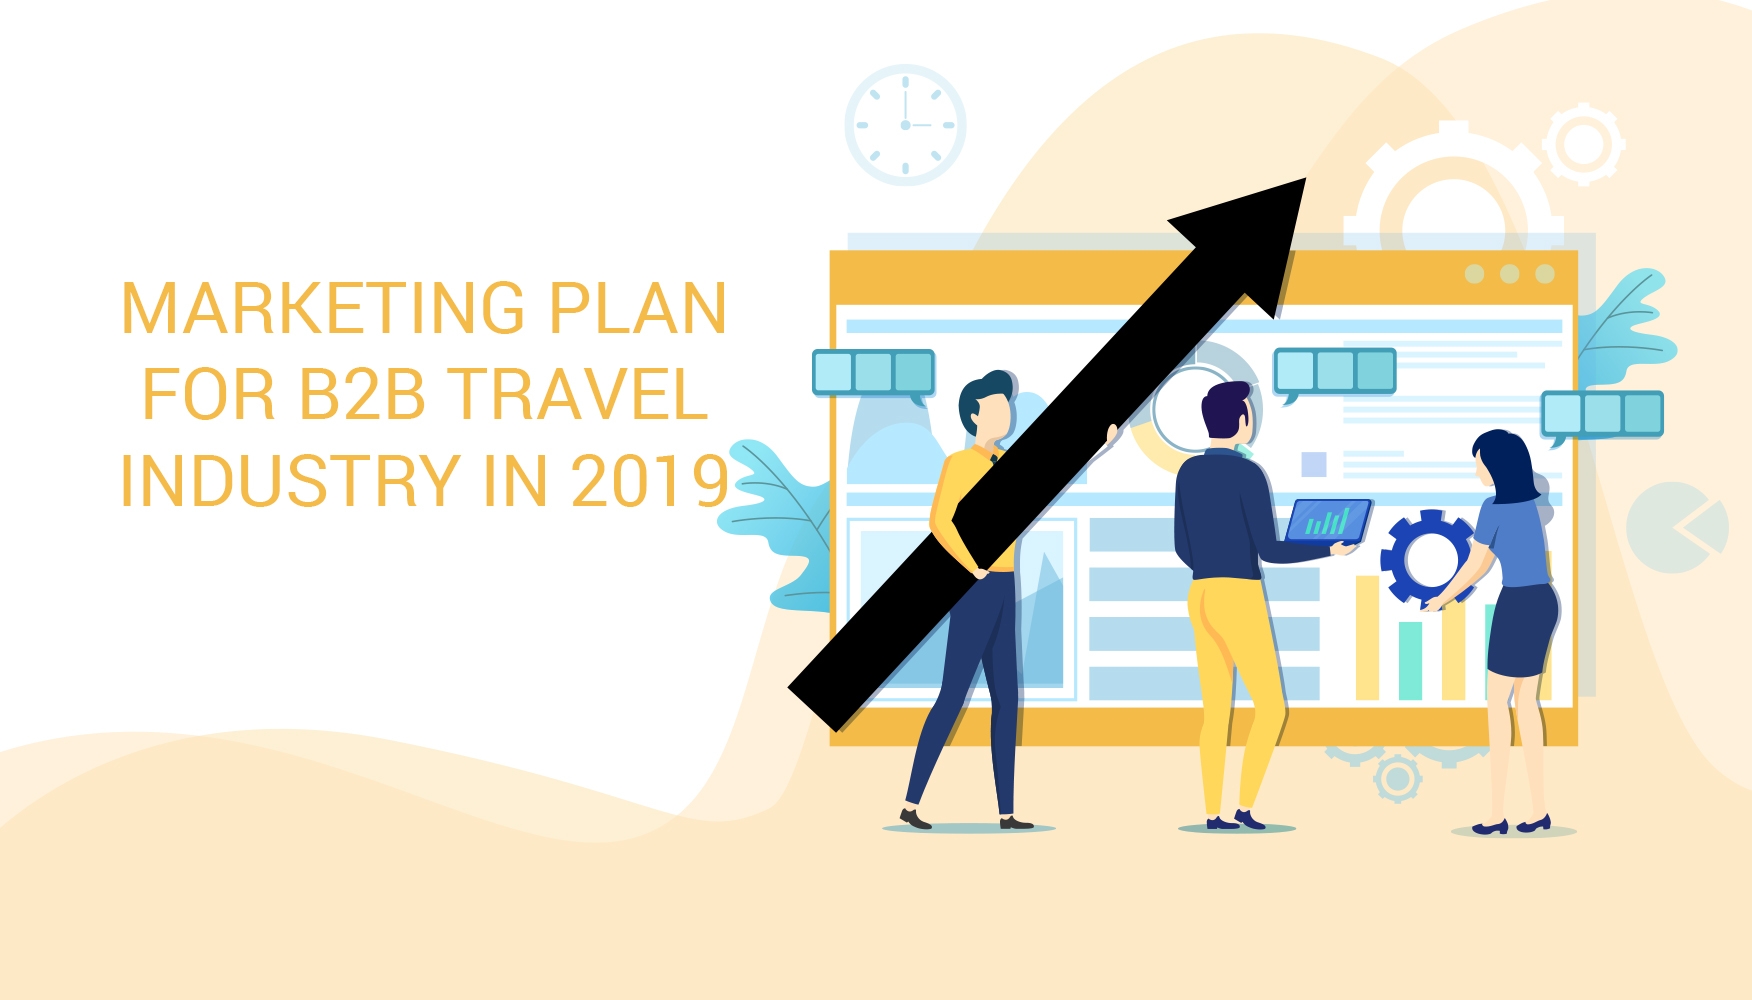 B2B travel, marketing plan for B2B travel industry